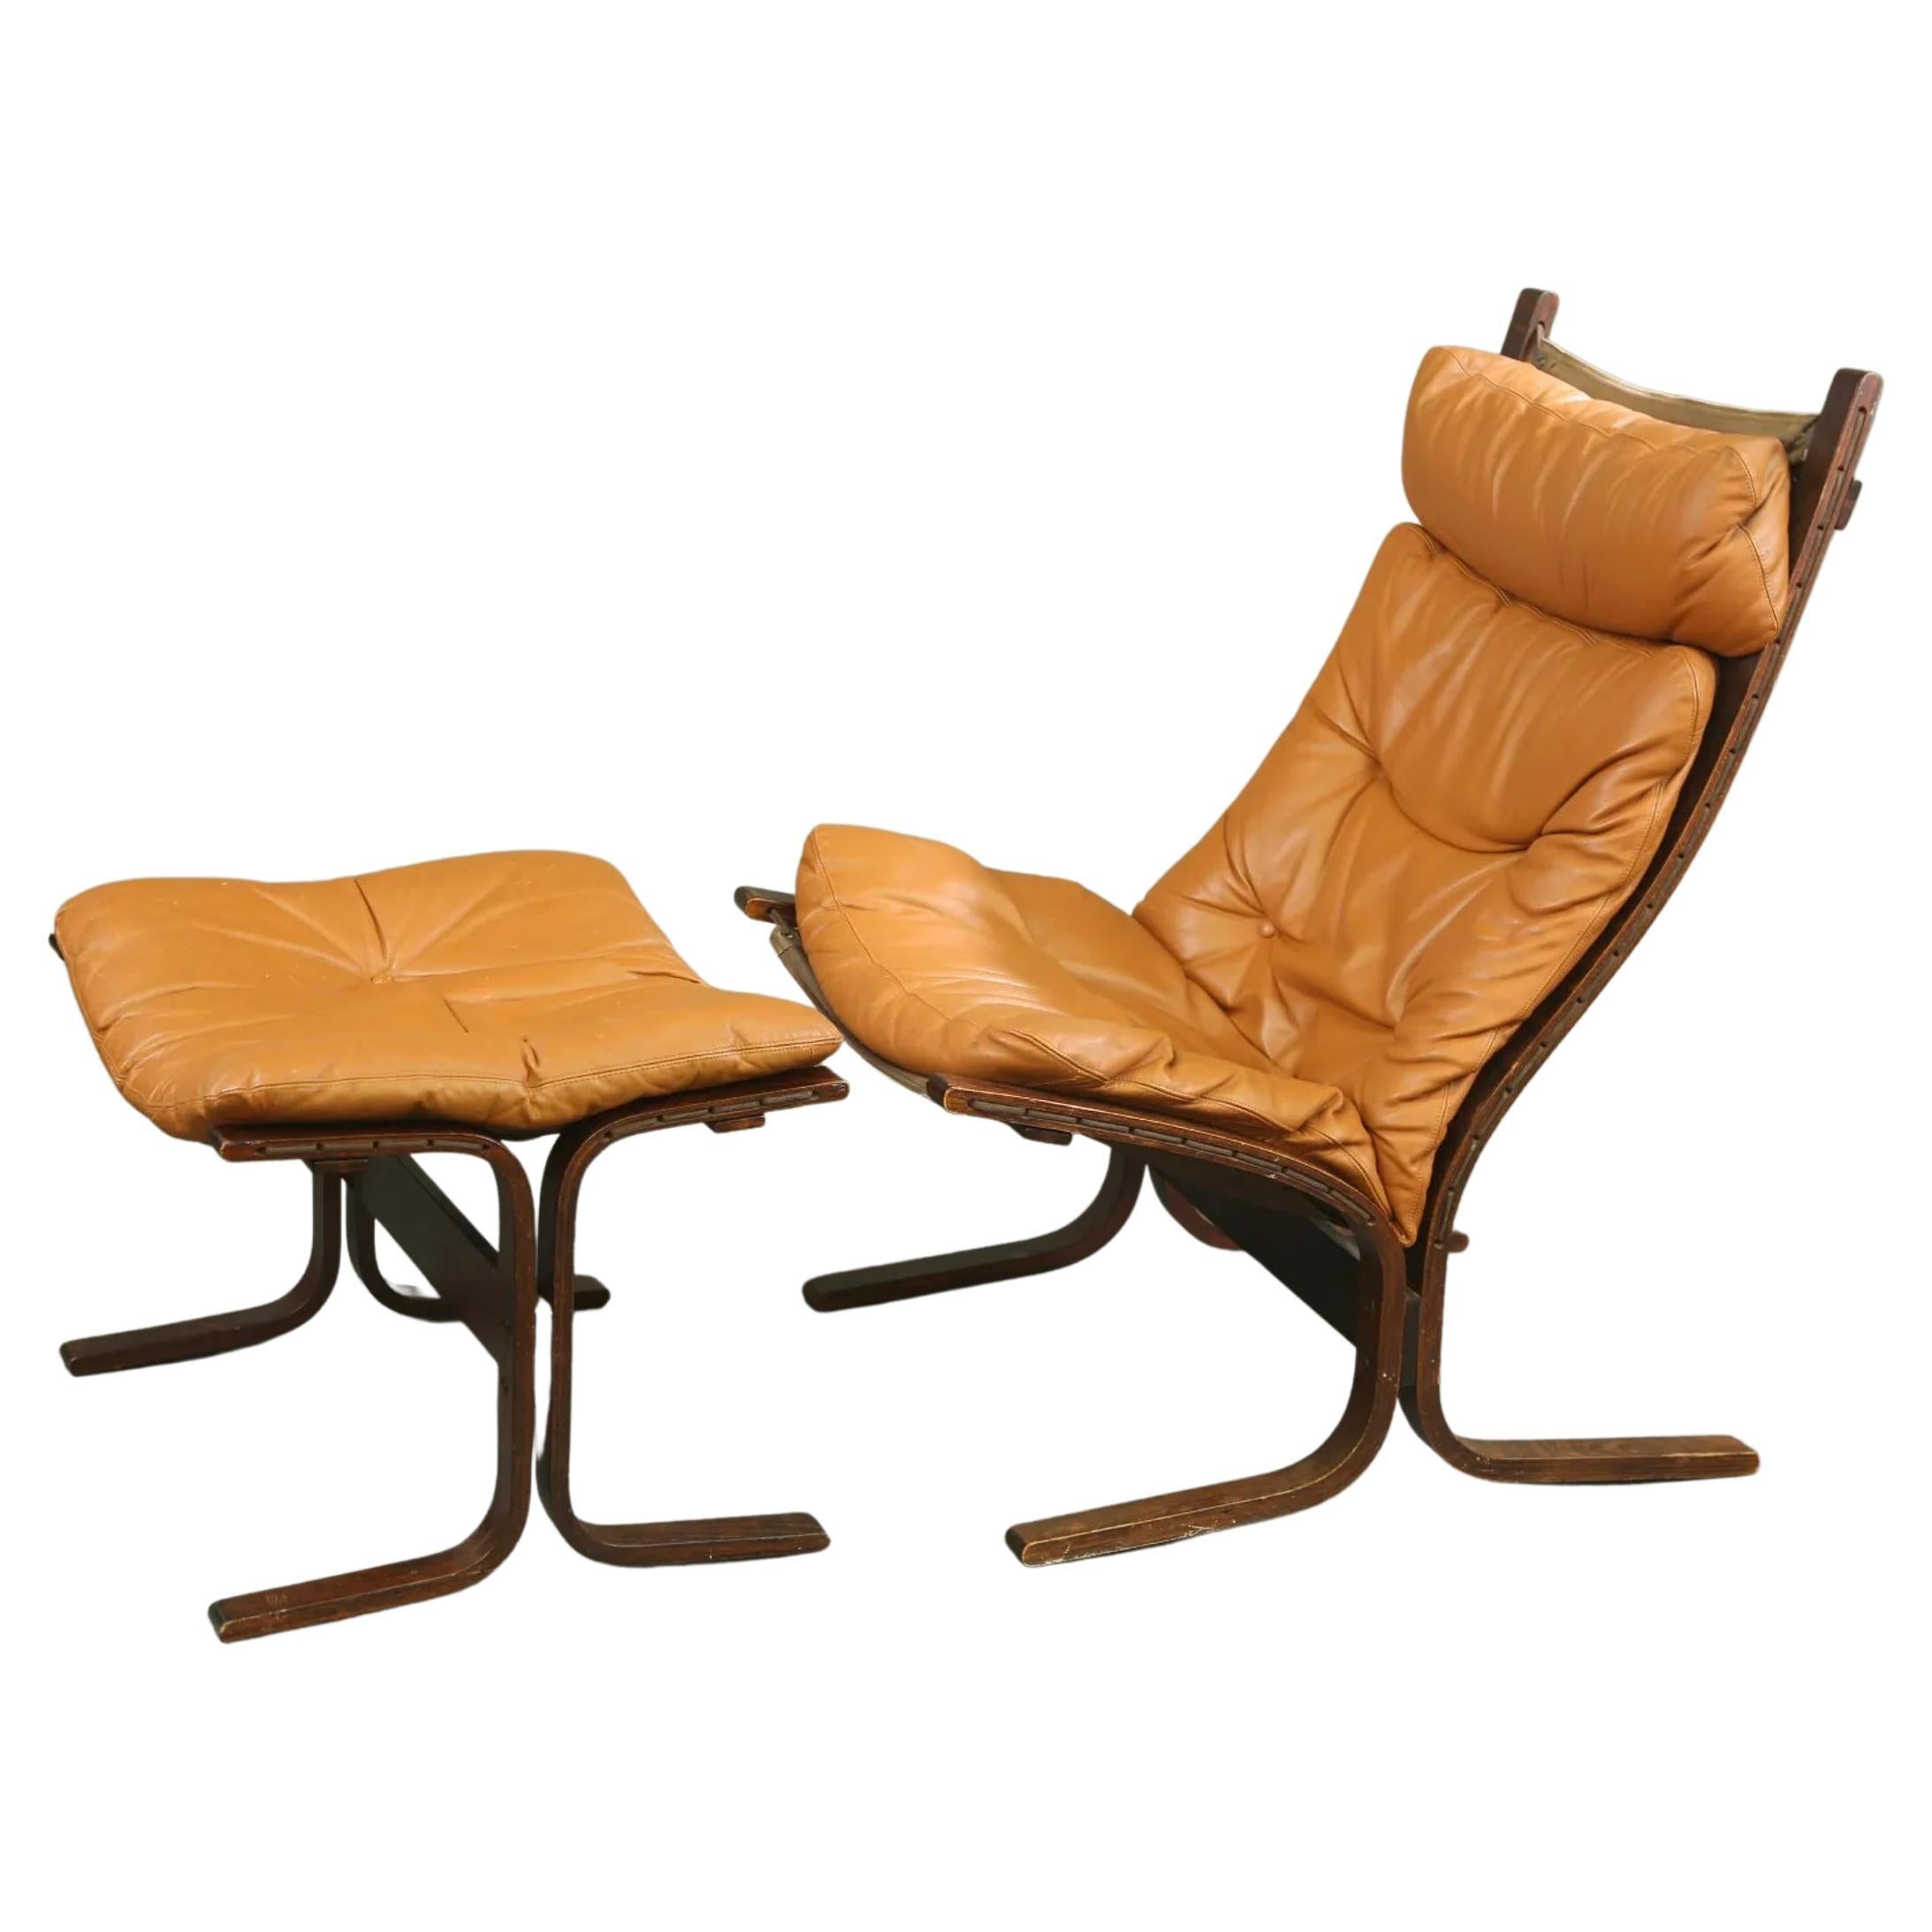 Midcentury Scandinavian Modern Leather Siesta Lounge Chair & Ottoman by Westnofa